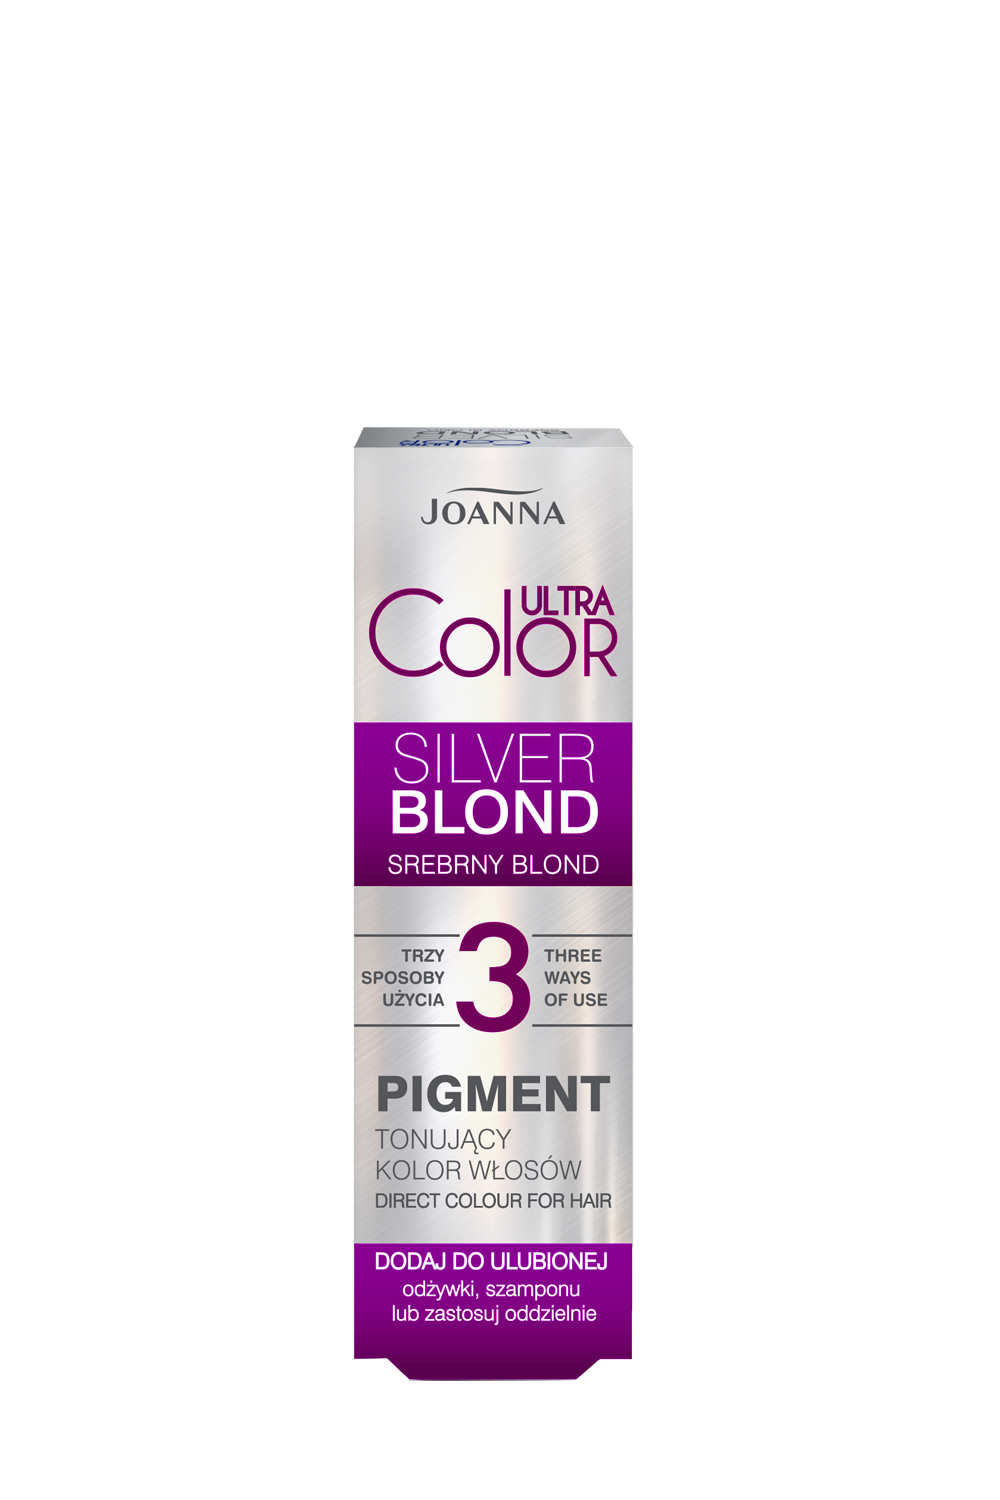 Pigment tonujący do włosów Joanna Ultra Color srebrny blond